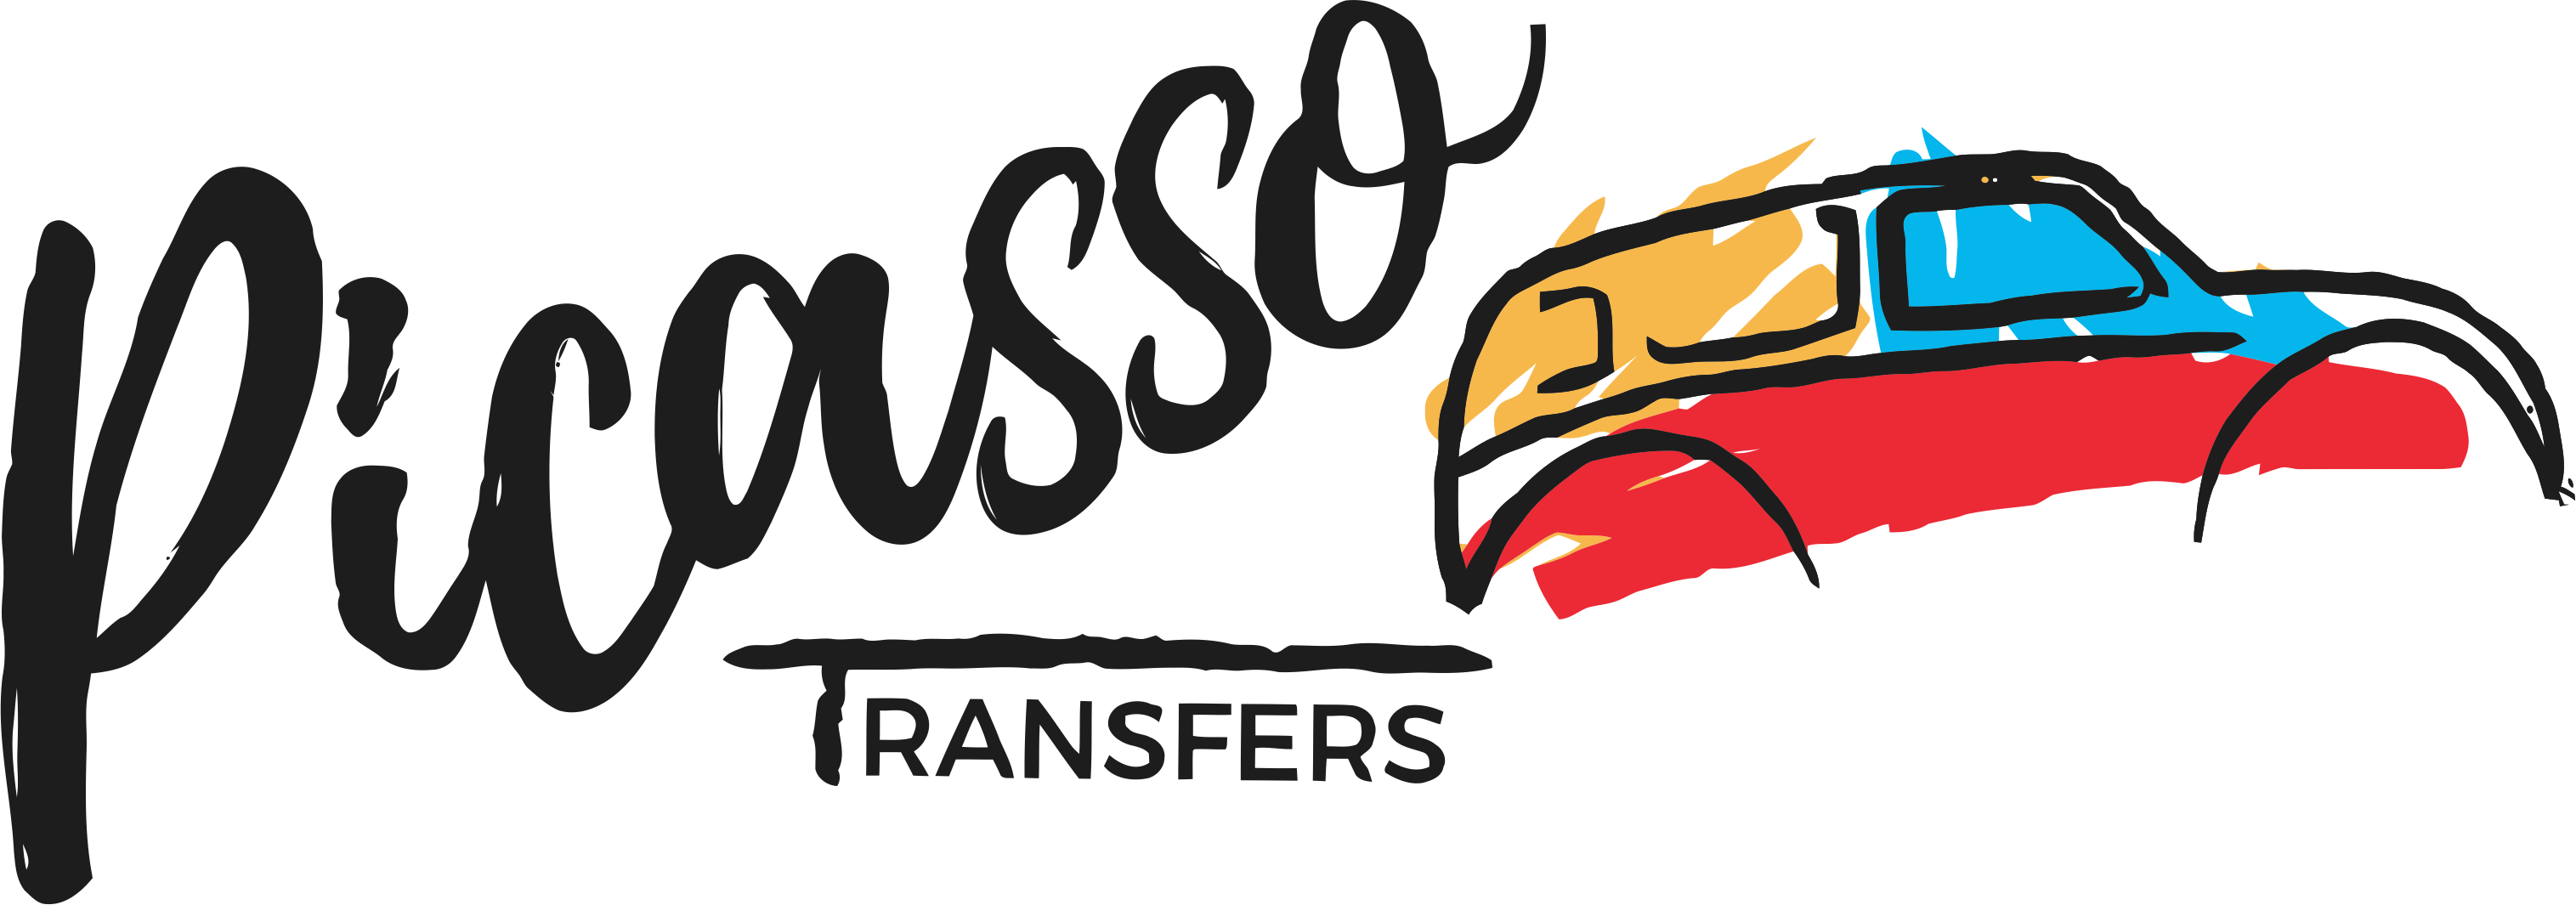 Picasso Transfers Malaga | Contact us - Picasso Transfers Malaga